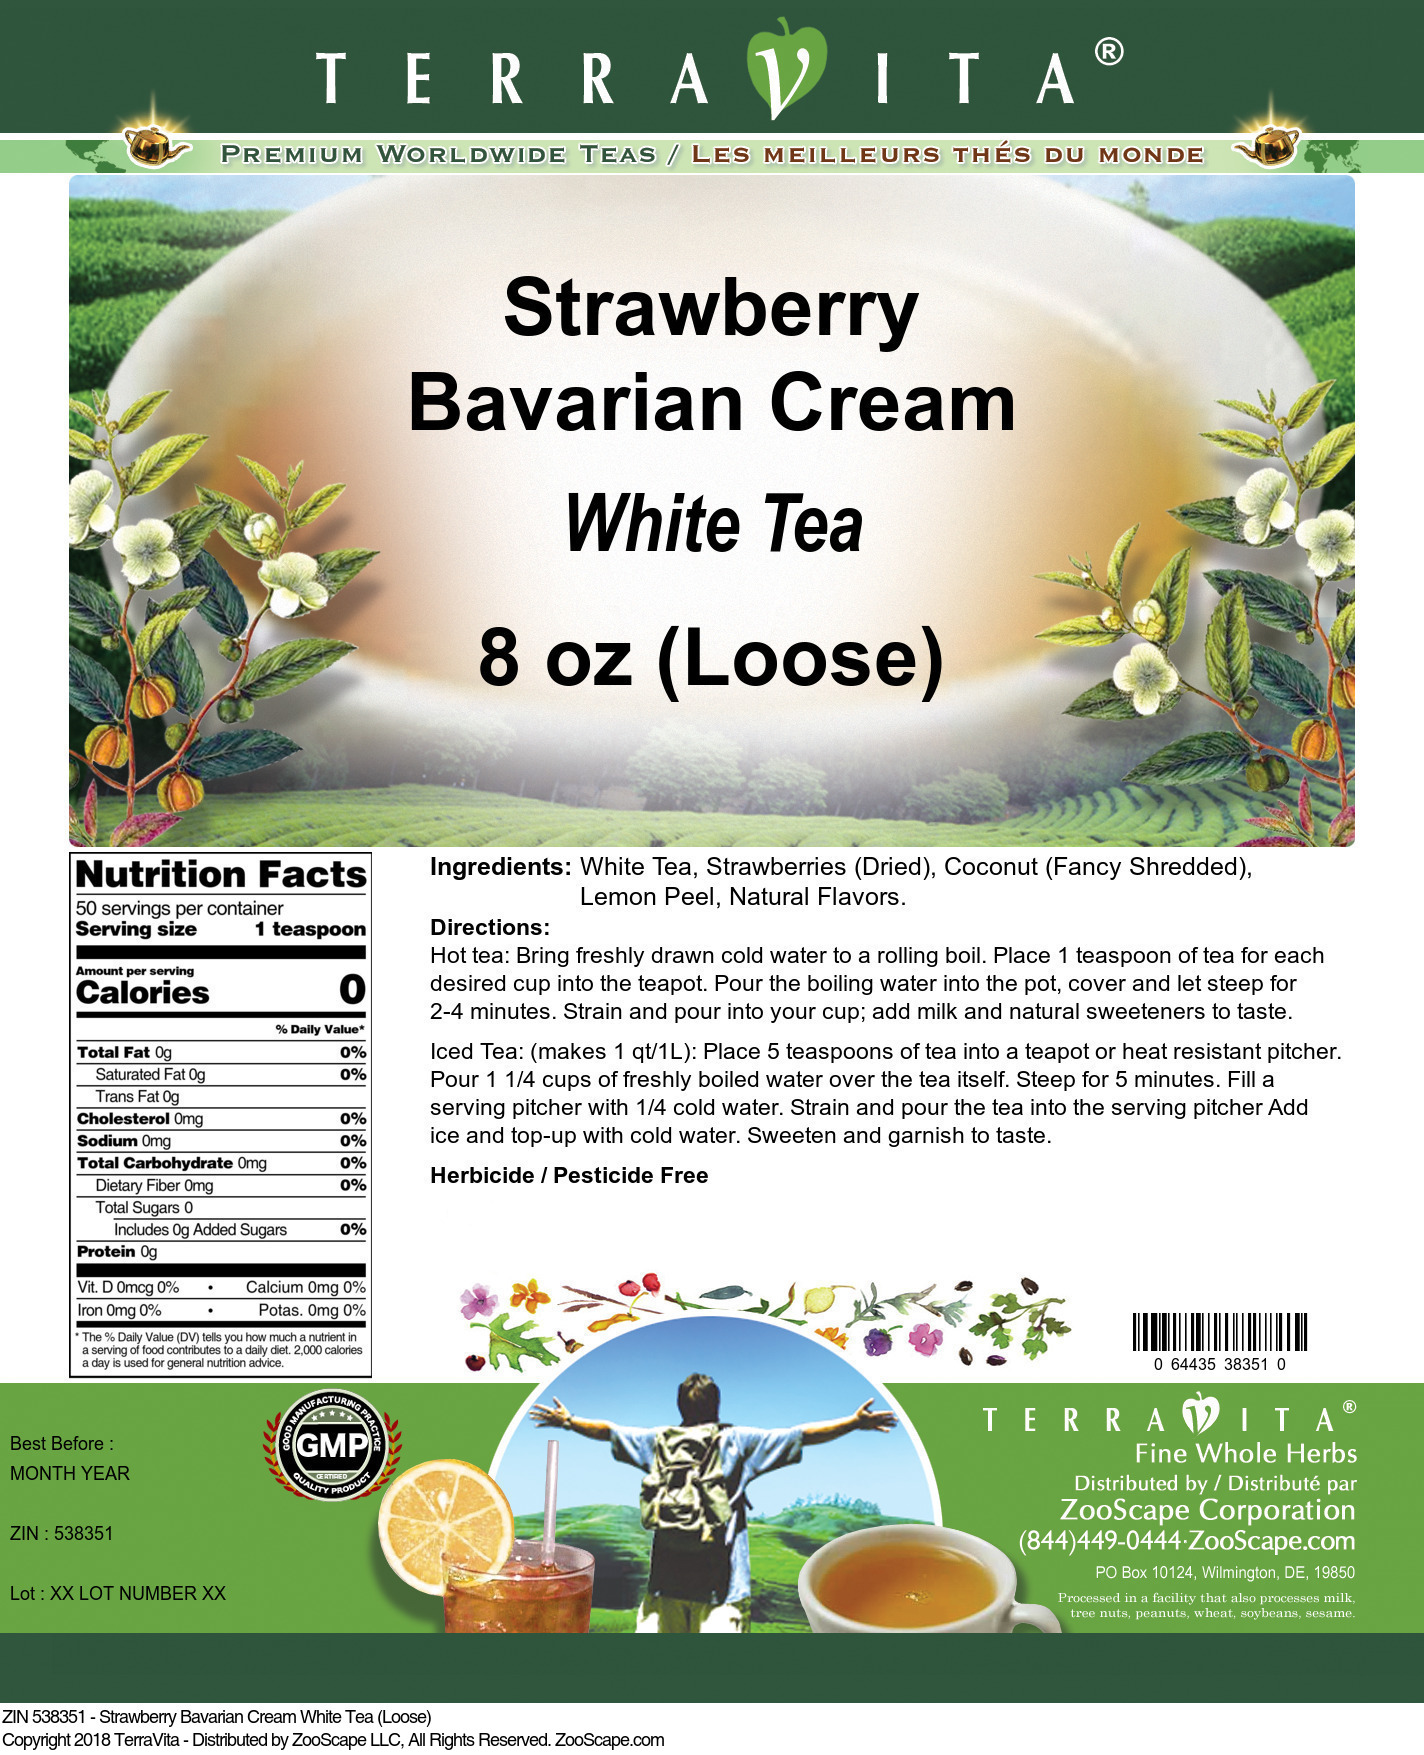 Strawberry Bavarian Cream White Tea (Loose) - Label